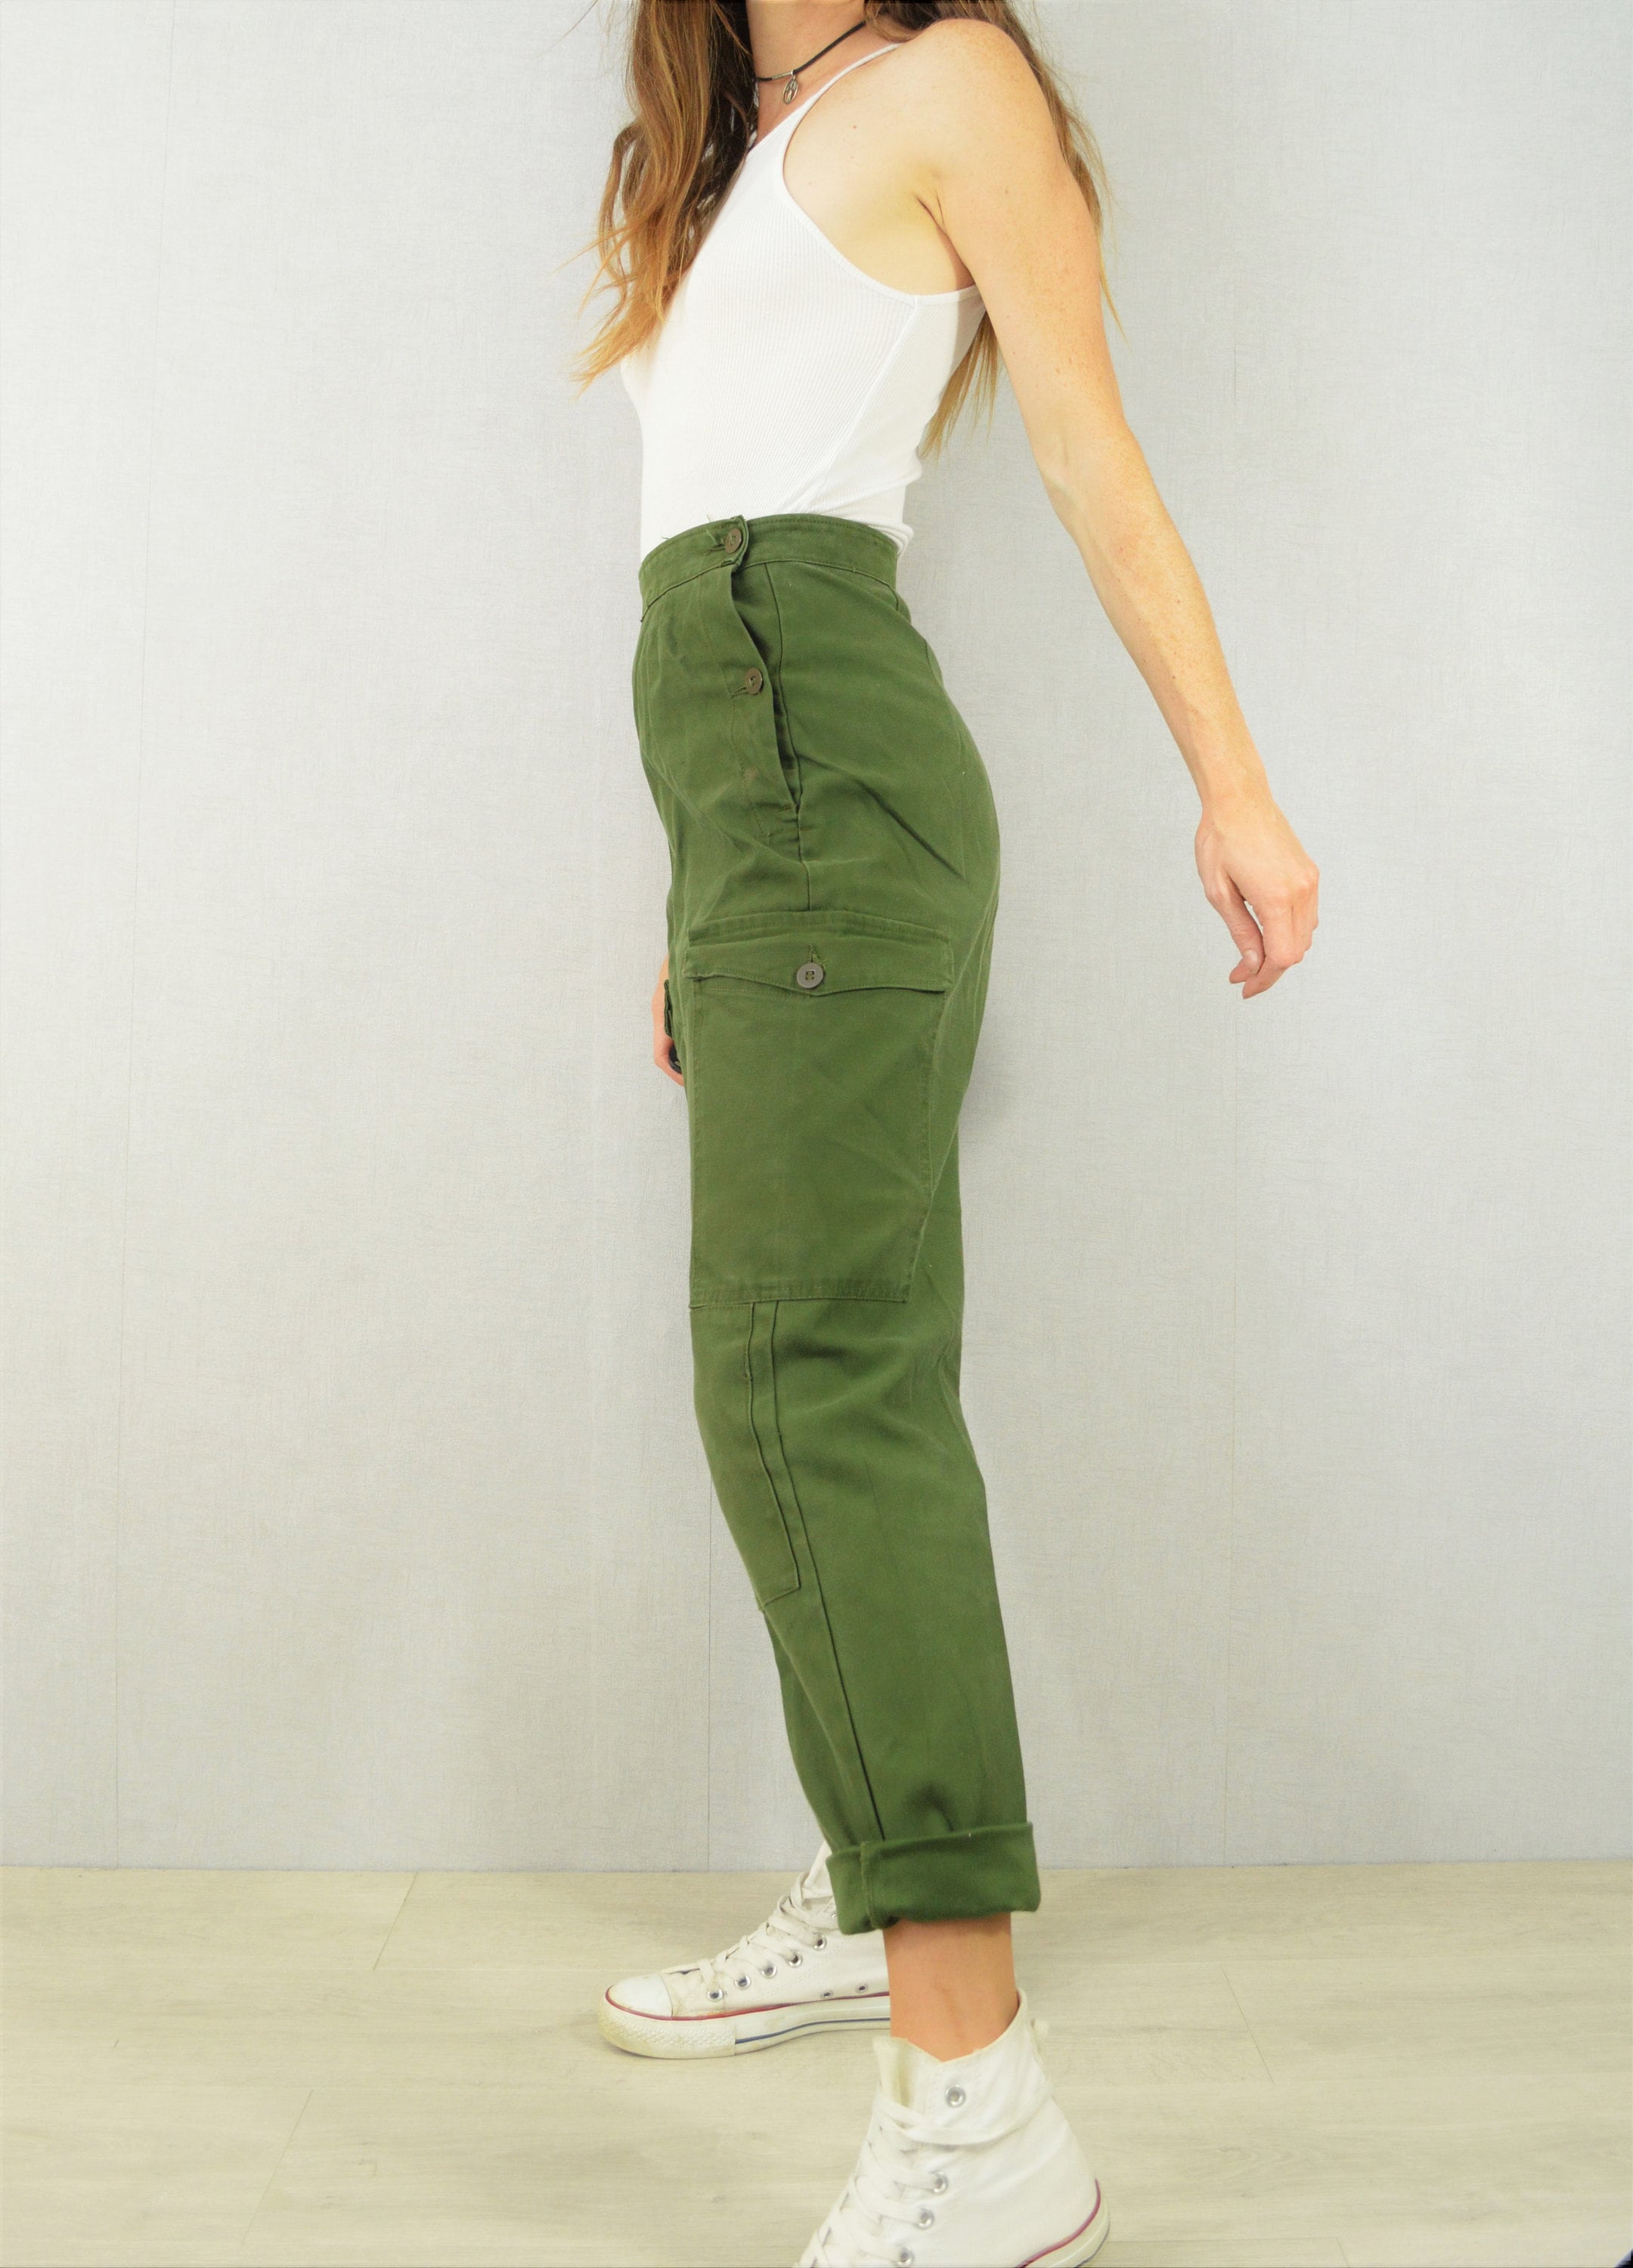 Vintage Cotton Linen Casual Pants: Comfortable & Stylish | Linions